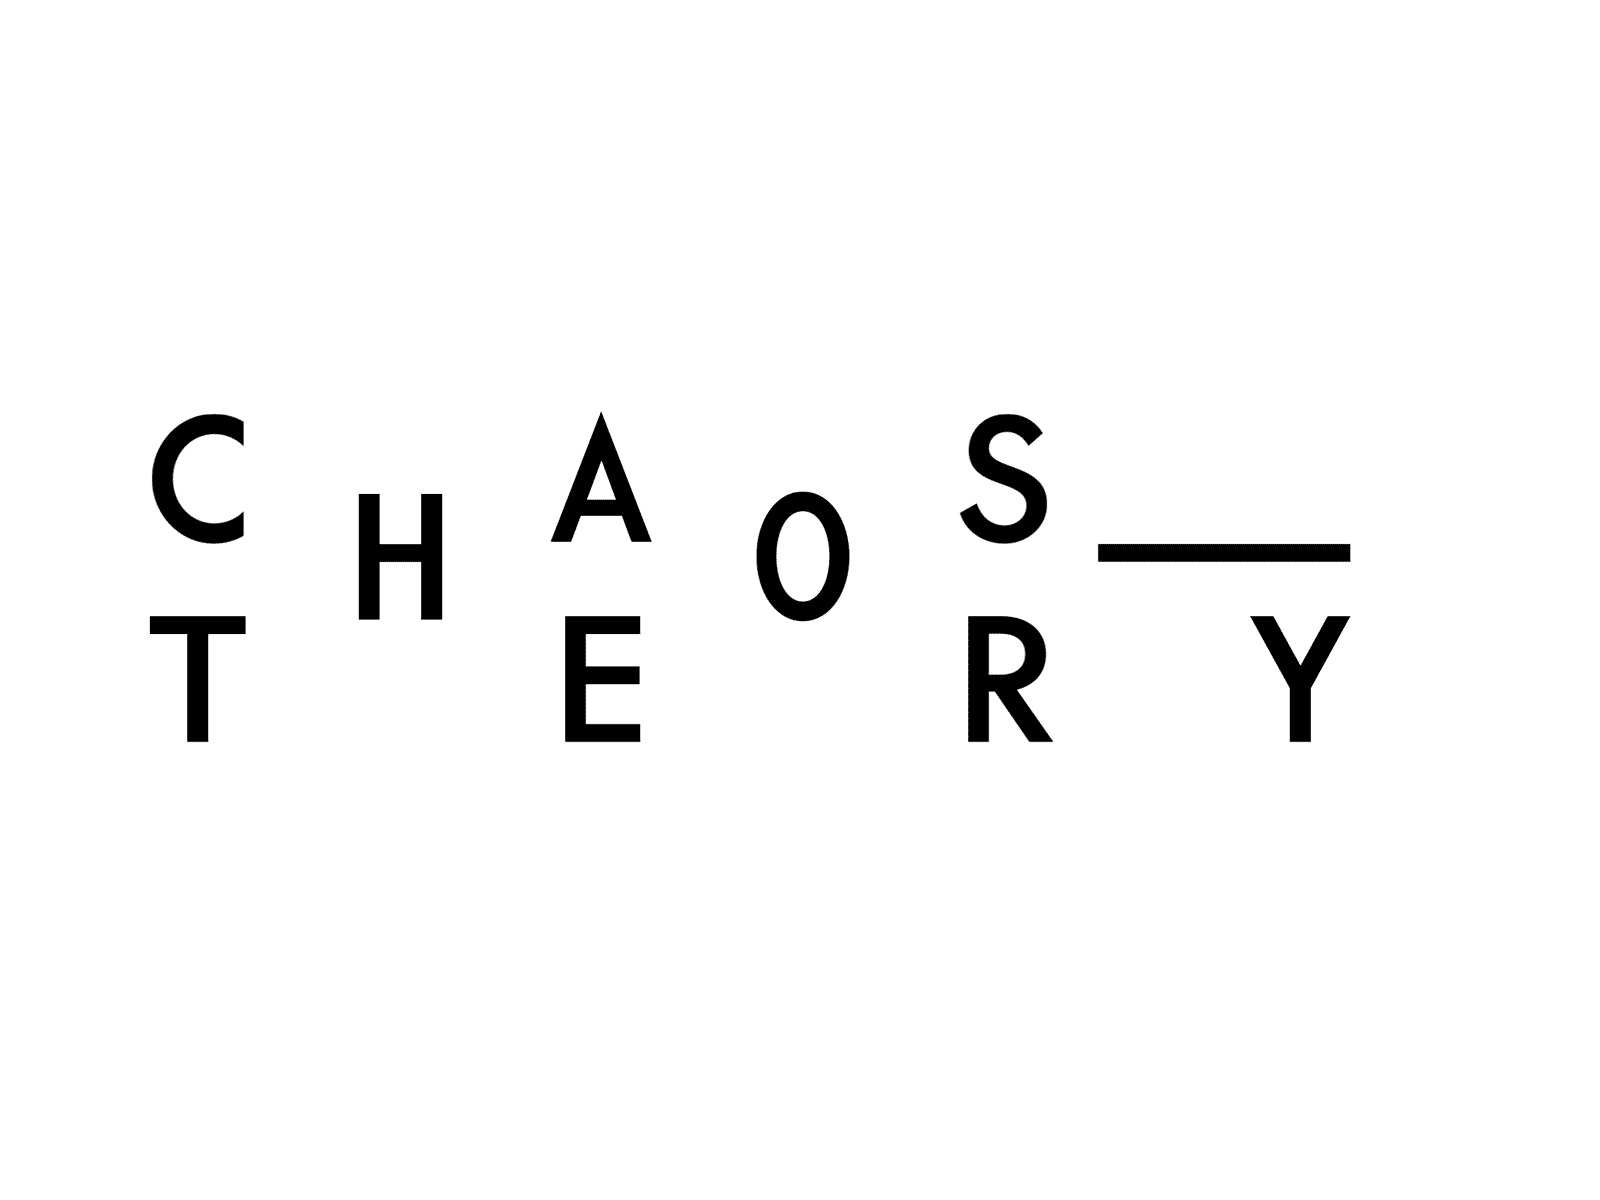 Chaos chaos logo typograhy